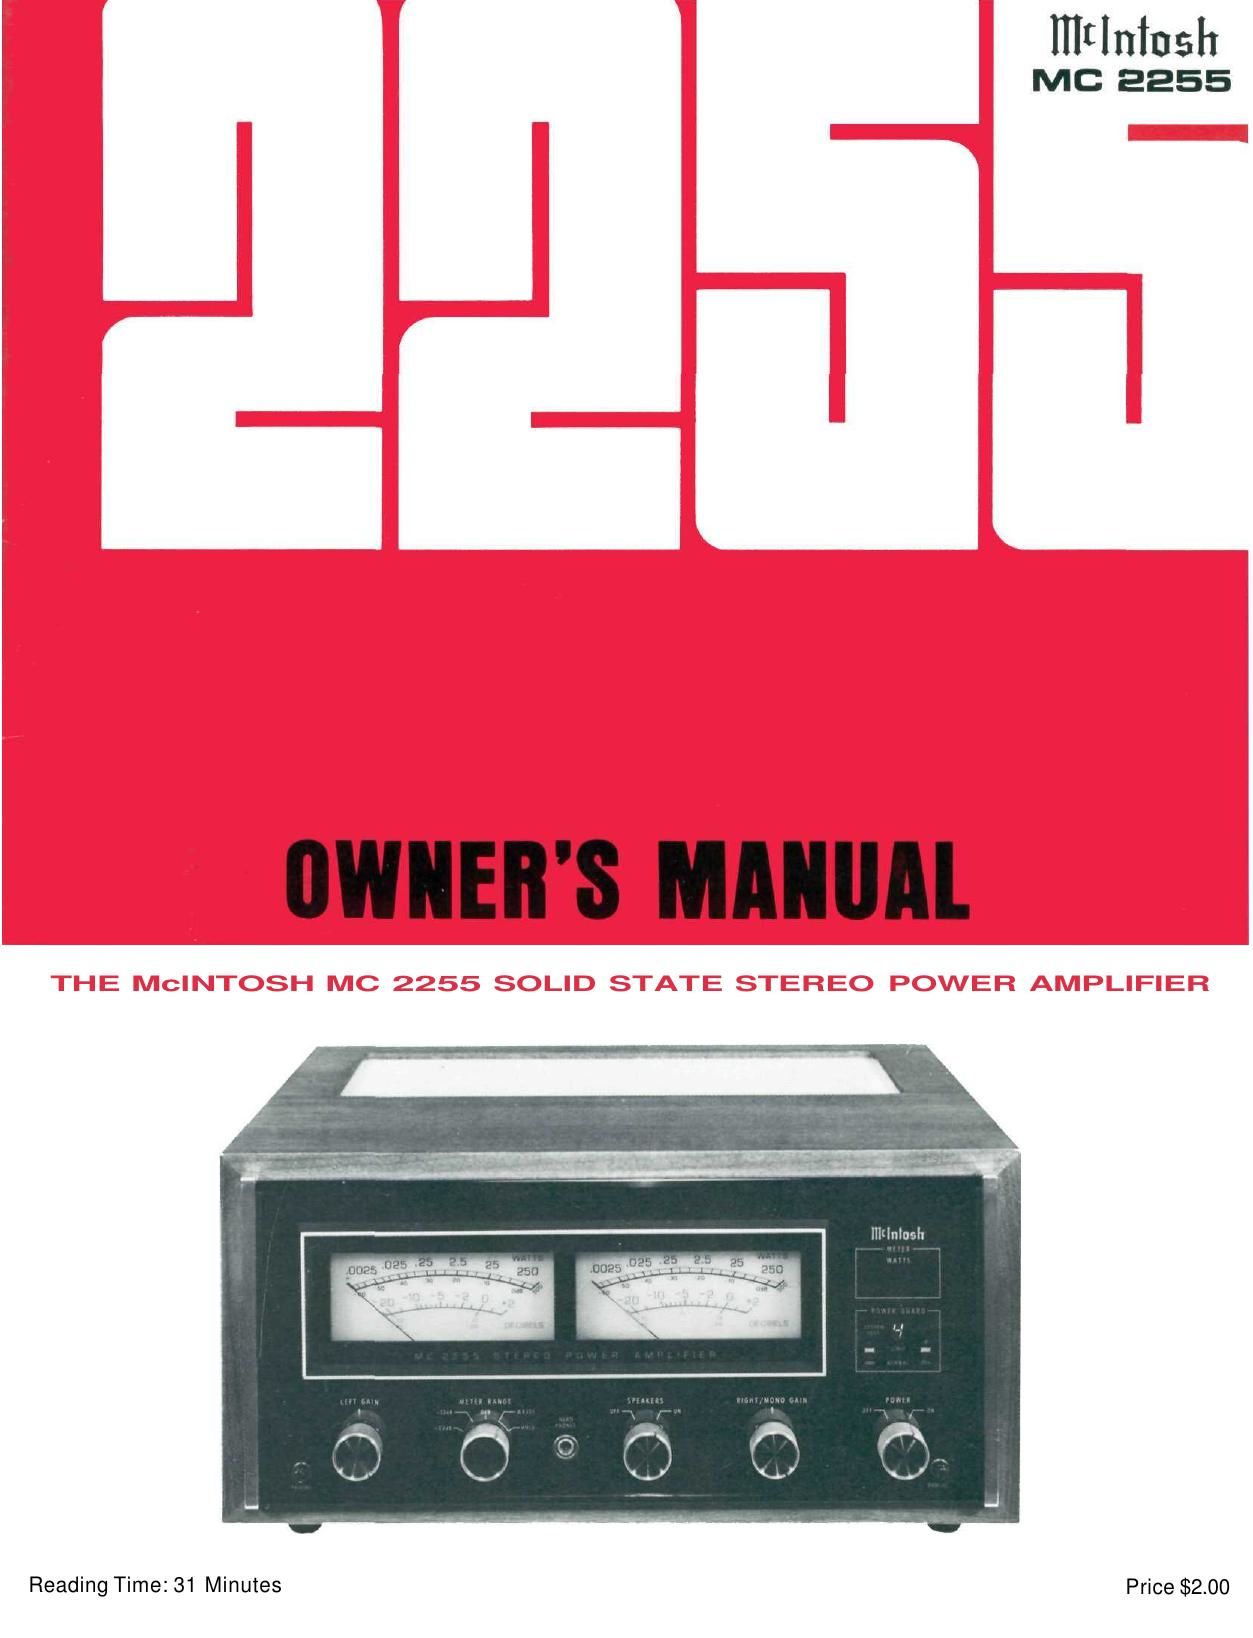 McIntosh MC 2255 Owners Manual